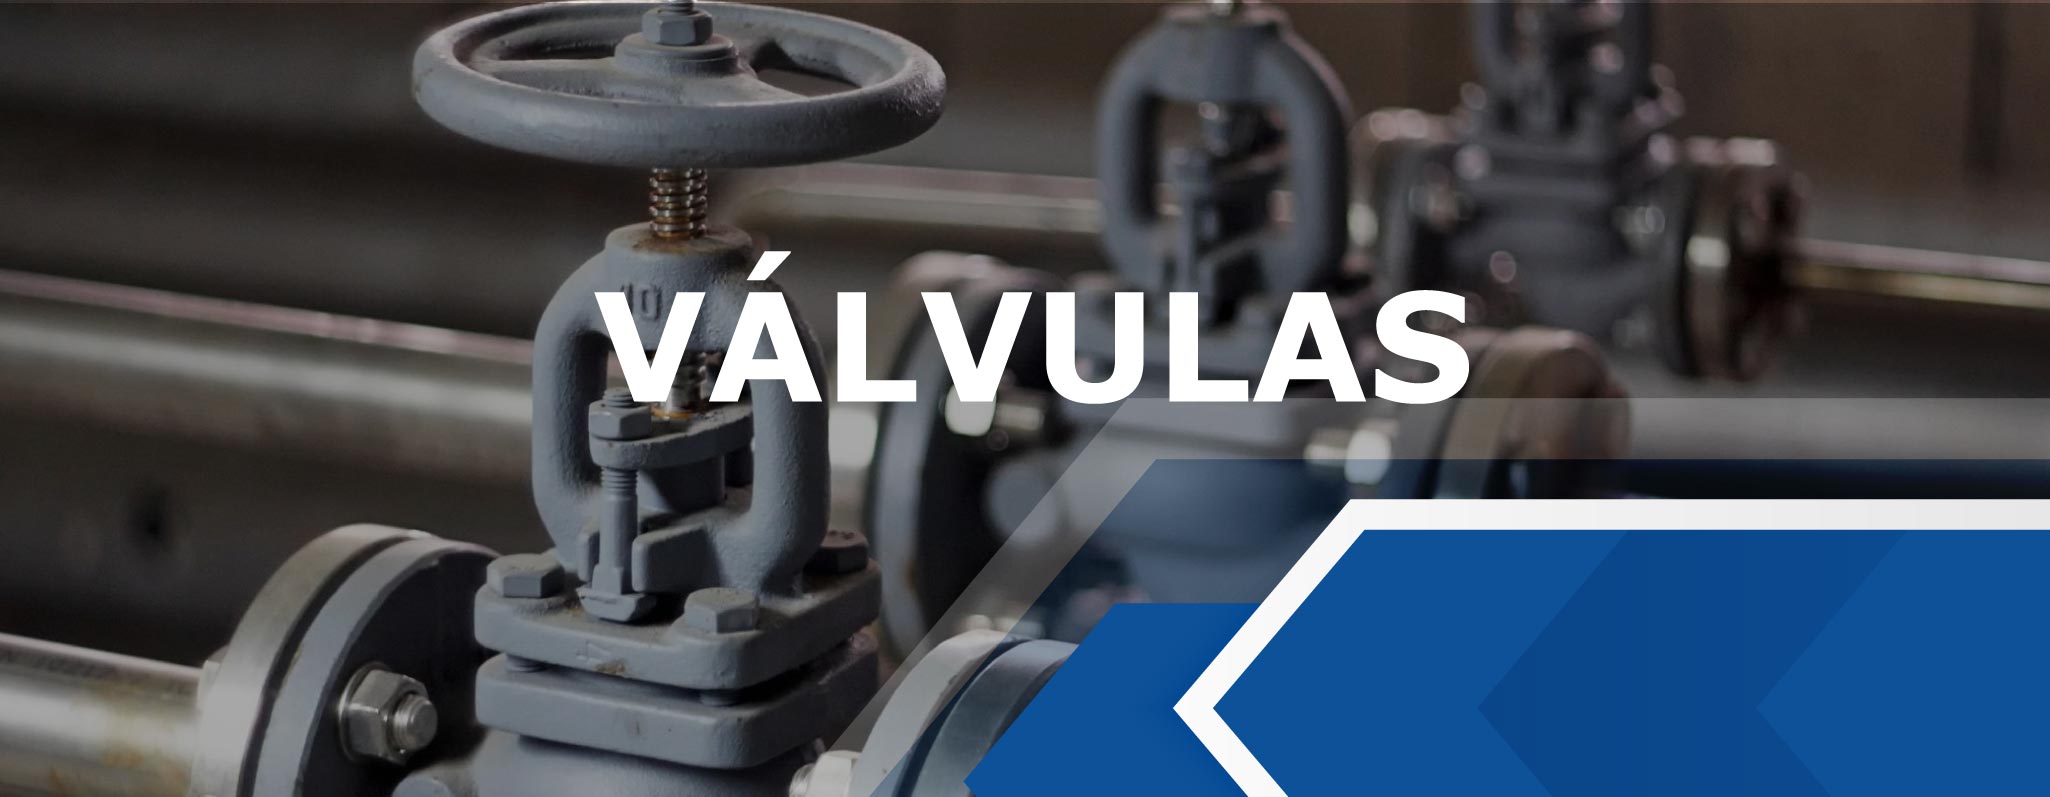 CTQ_Valvulas-Trusted-Valve-Movil